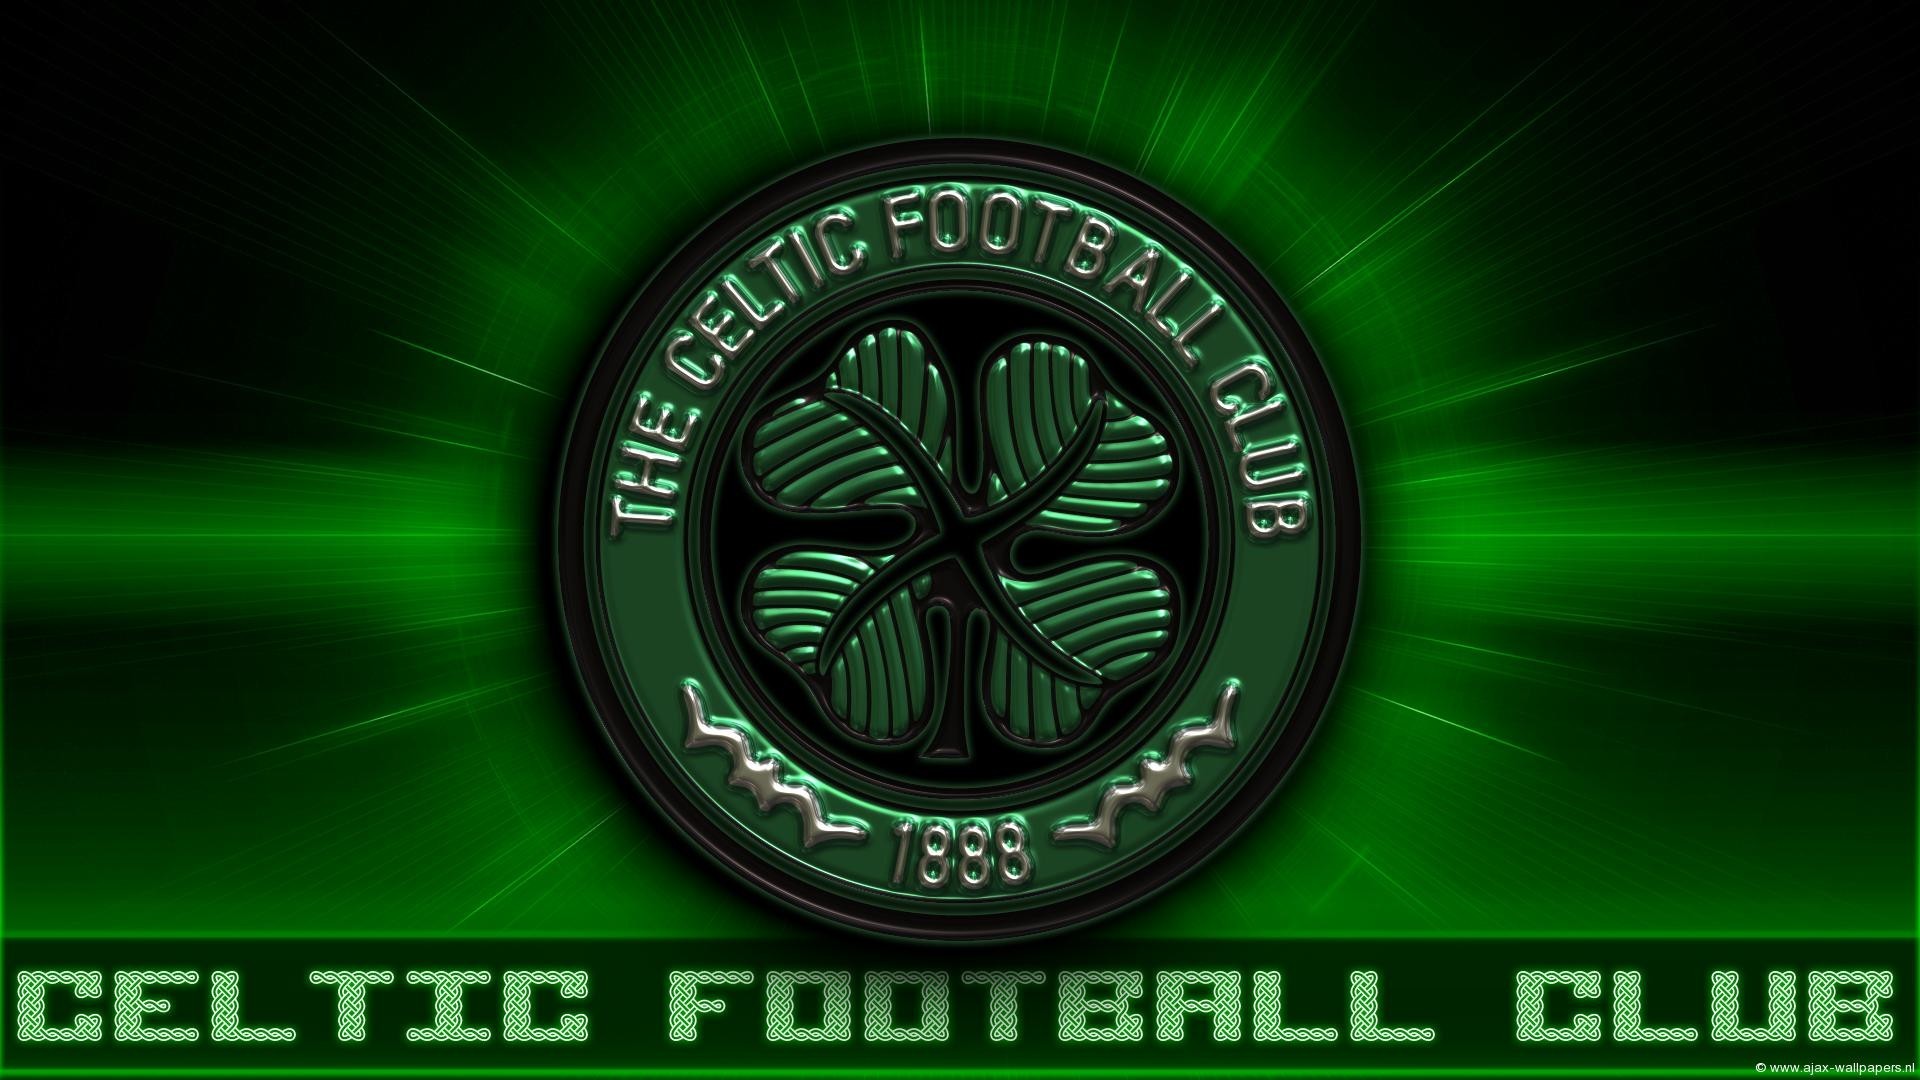 Celtic Fc Background Image